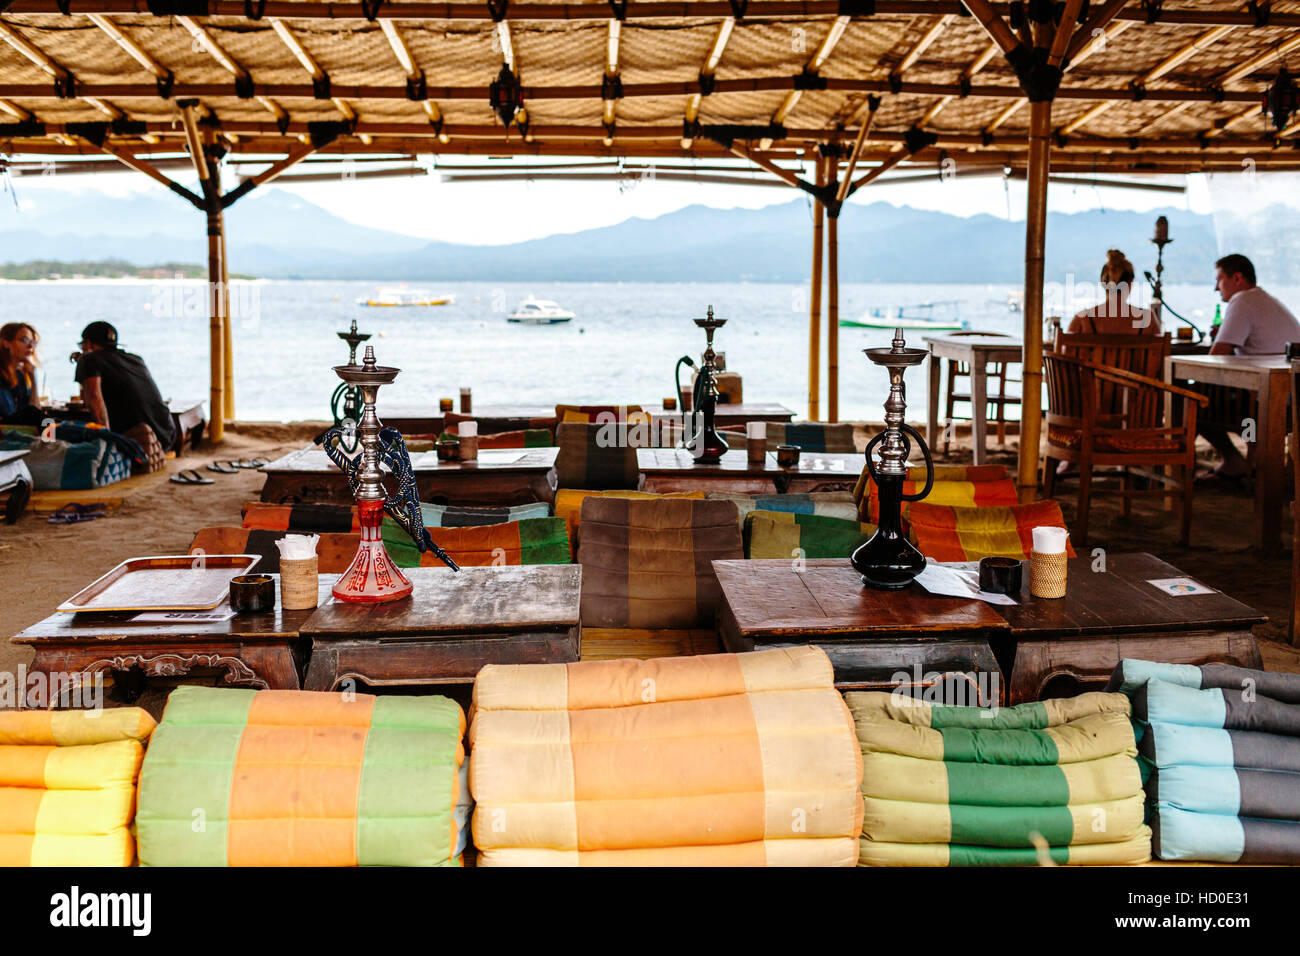 Pesona Indian Restaurant and Shisha bar on the beach at Gili Trawangan Stock Photo